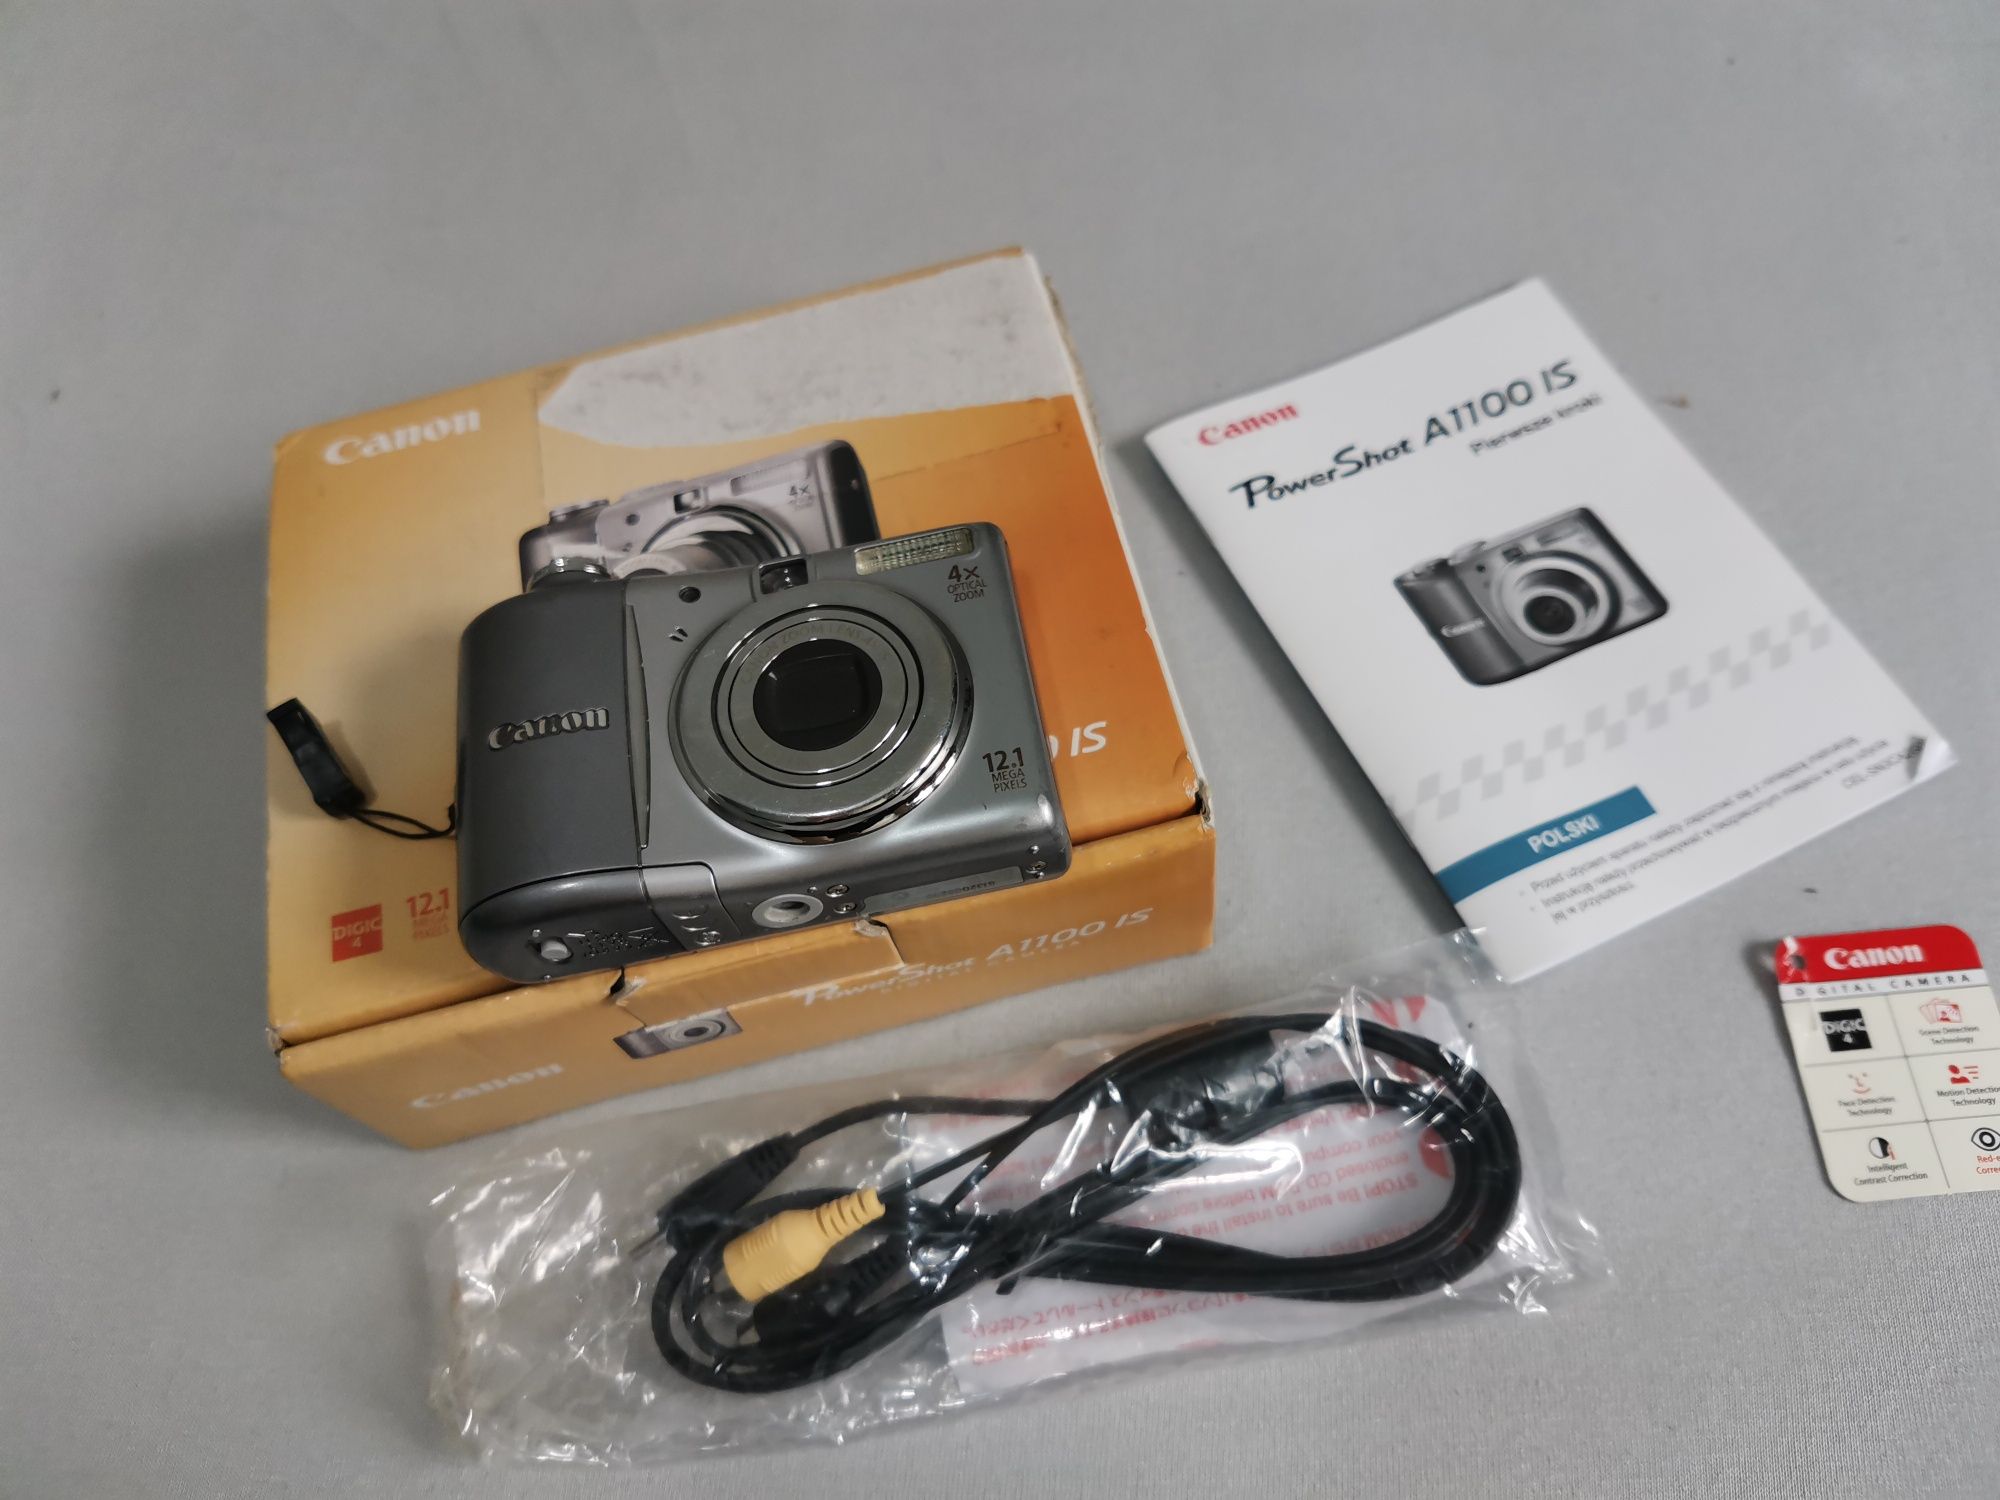 Canon Powershot A1100 IS digital camera aparat 12.1 cyfrowy